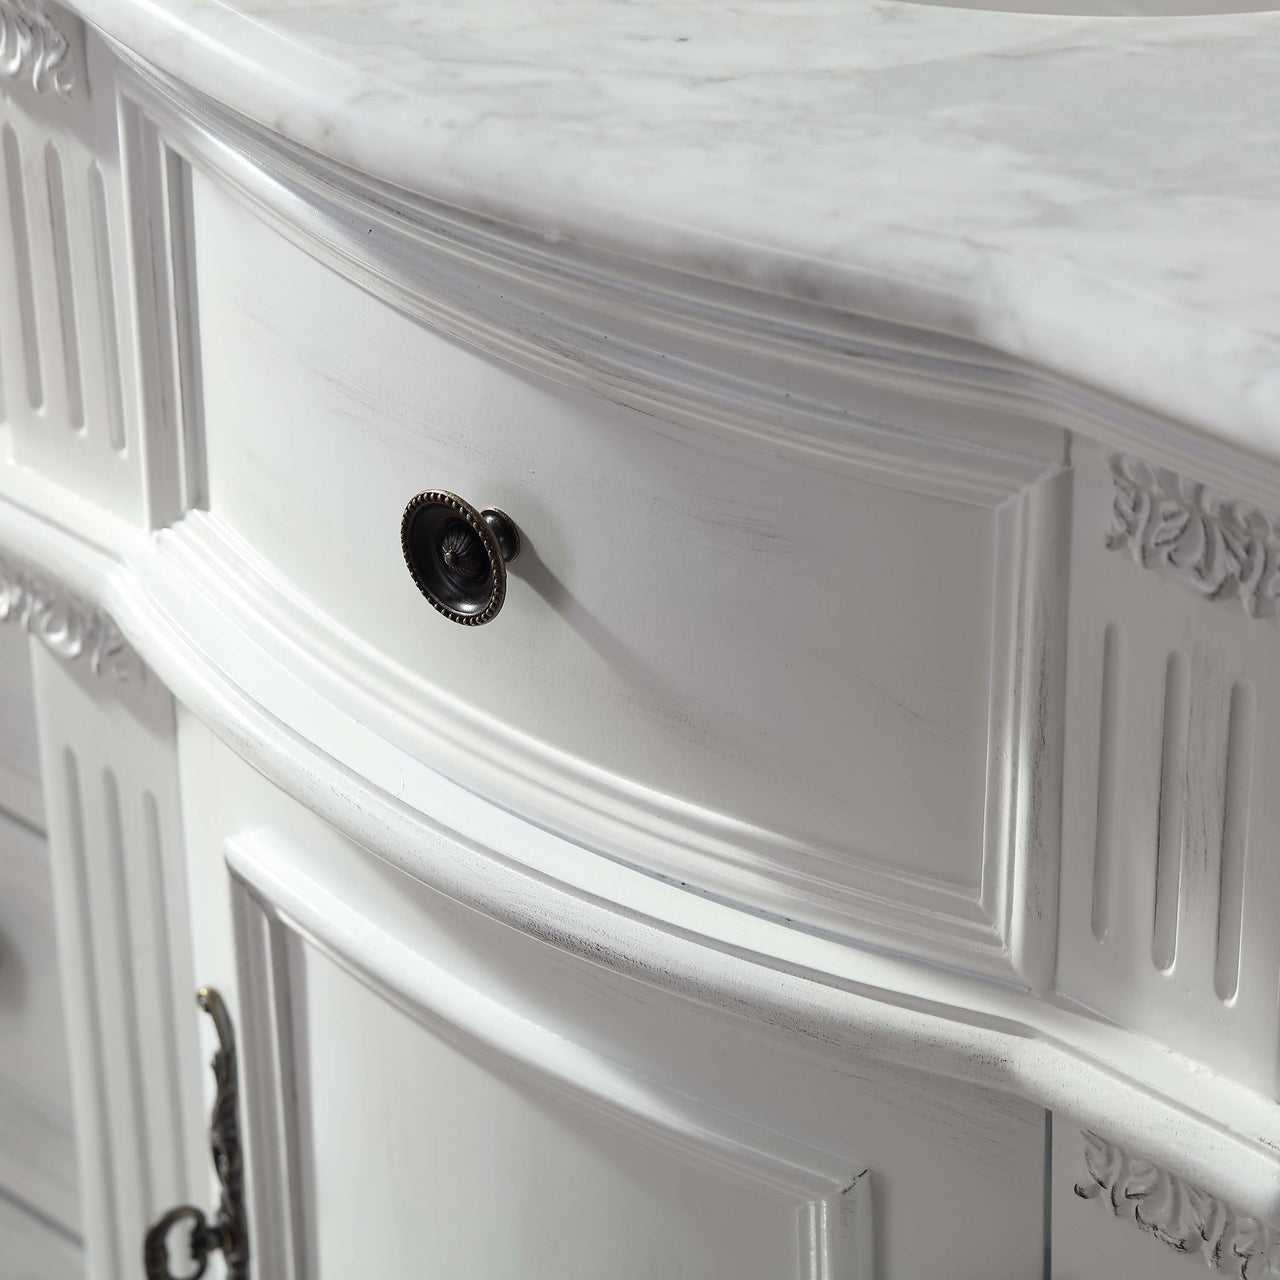 SilkRoad 48" Double Sink Cabinet - Carrara White Top, Undermount White Ceramic Sinks (3-hole)